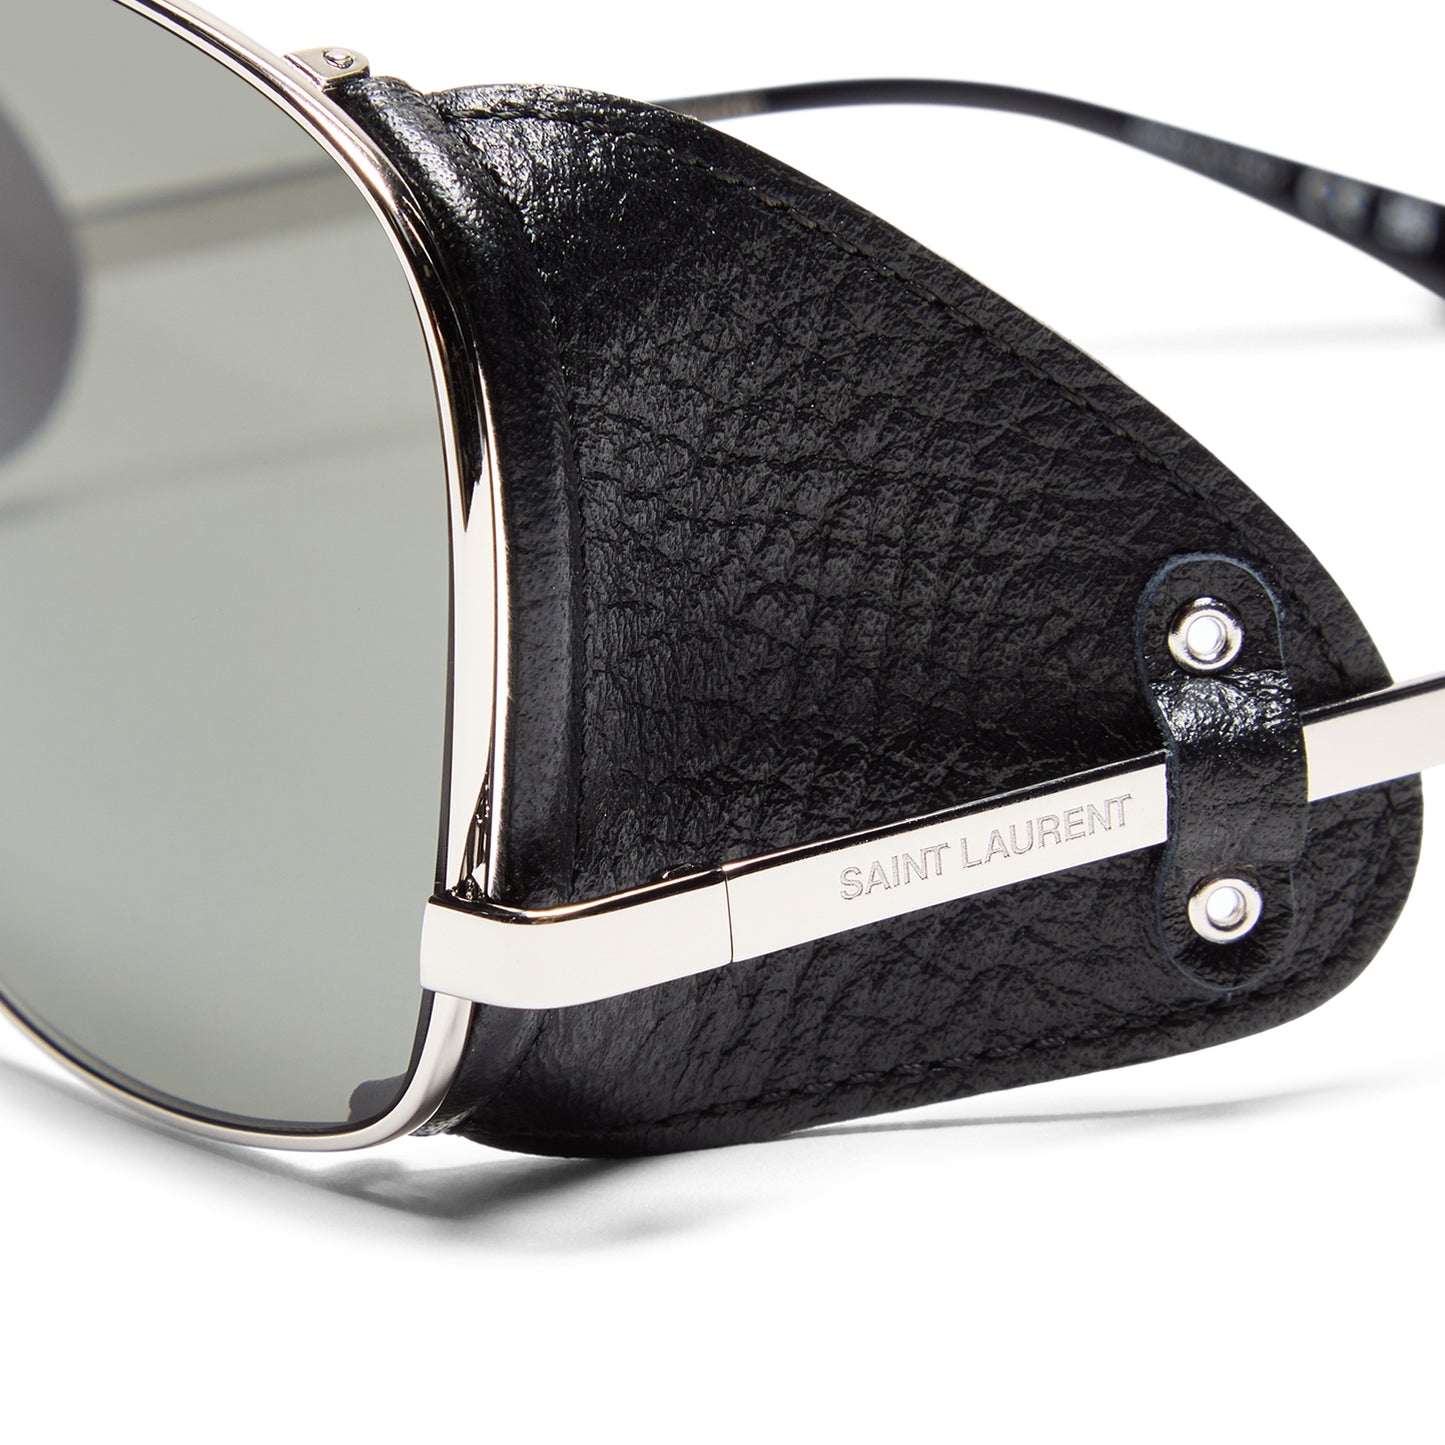 Saint Laurent SL 653 Sunglasses (Grey)